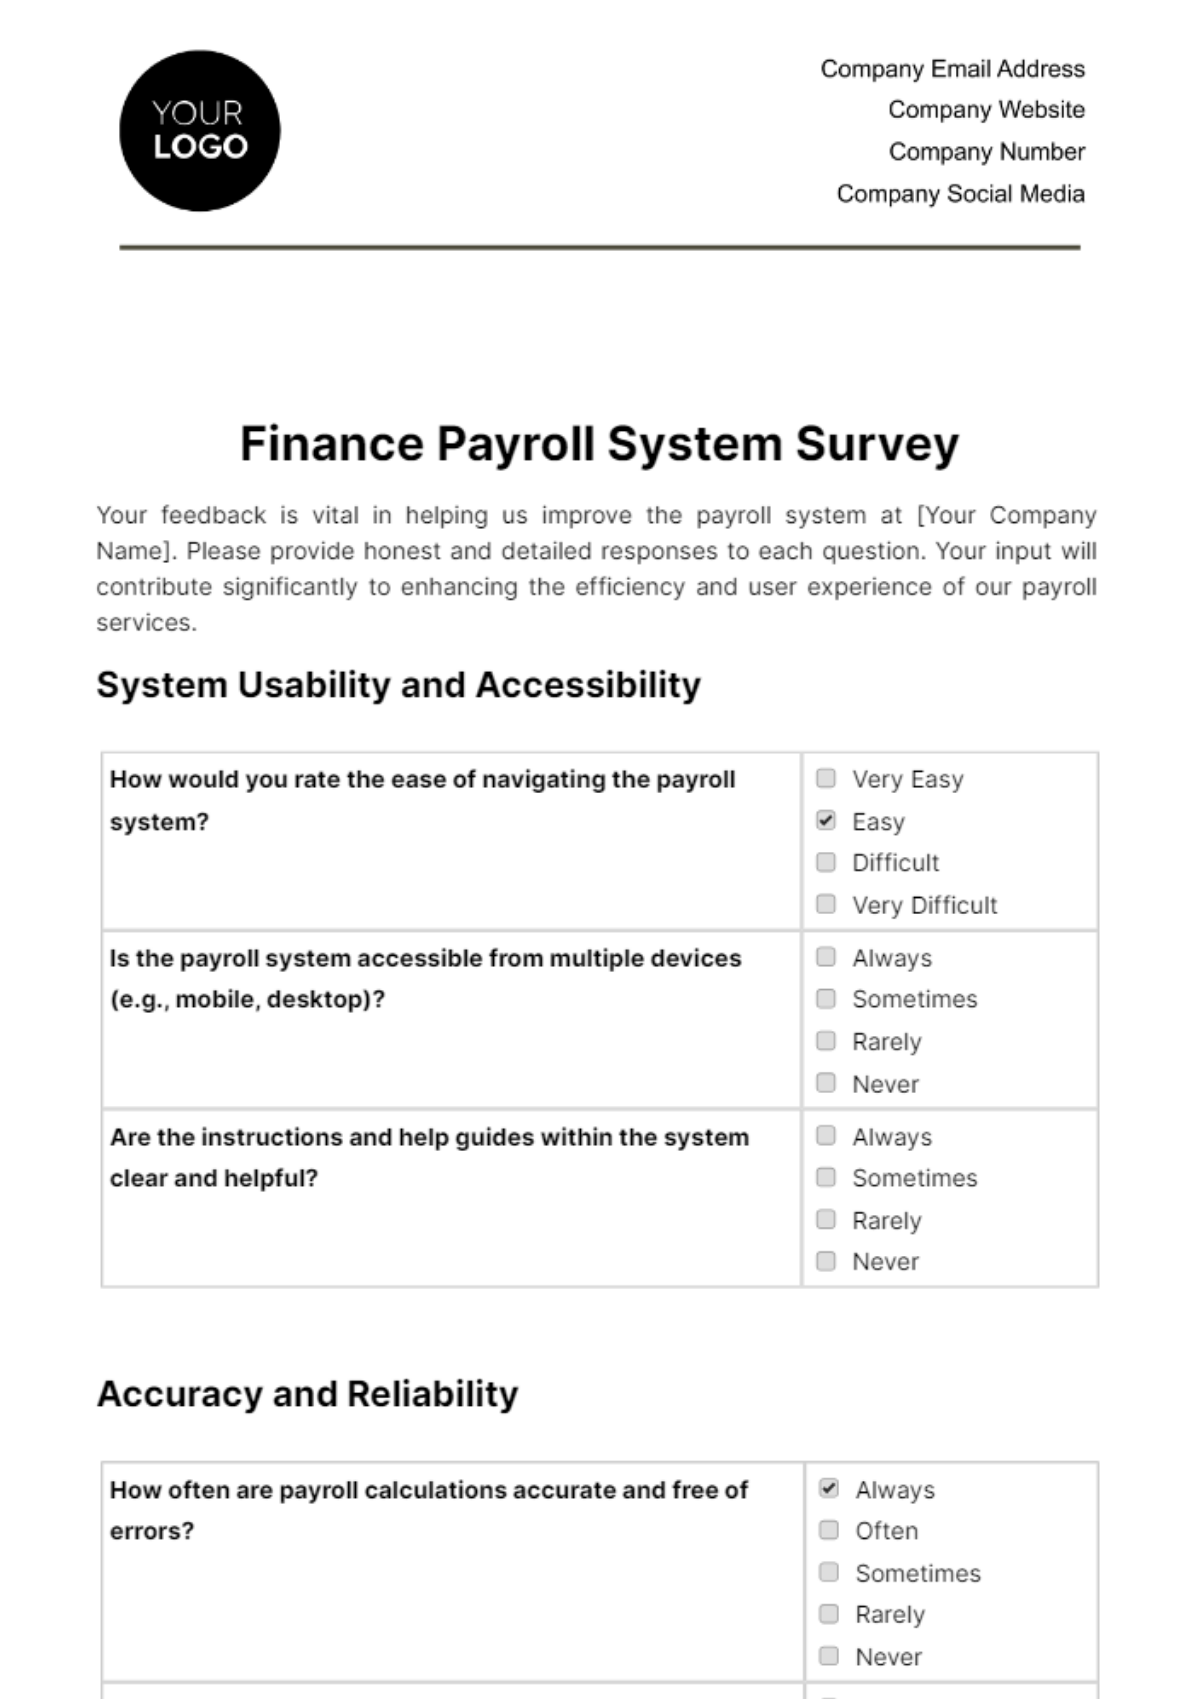 Free Finance Payroll System Survey Template